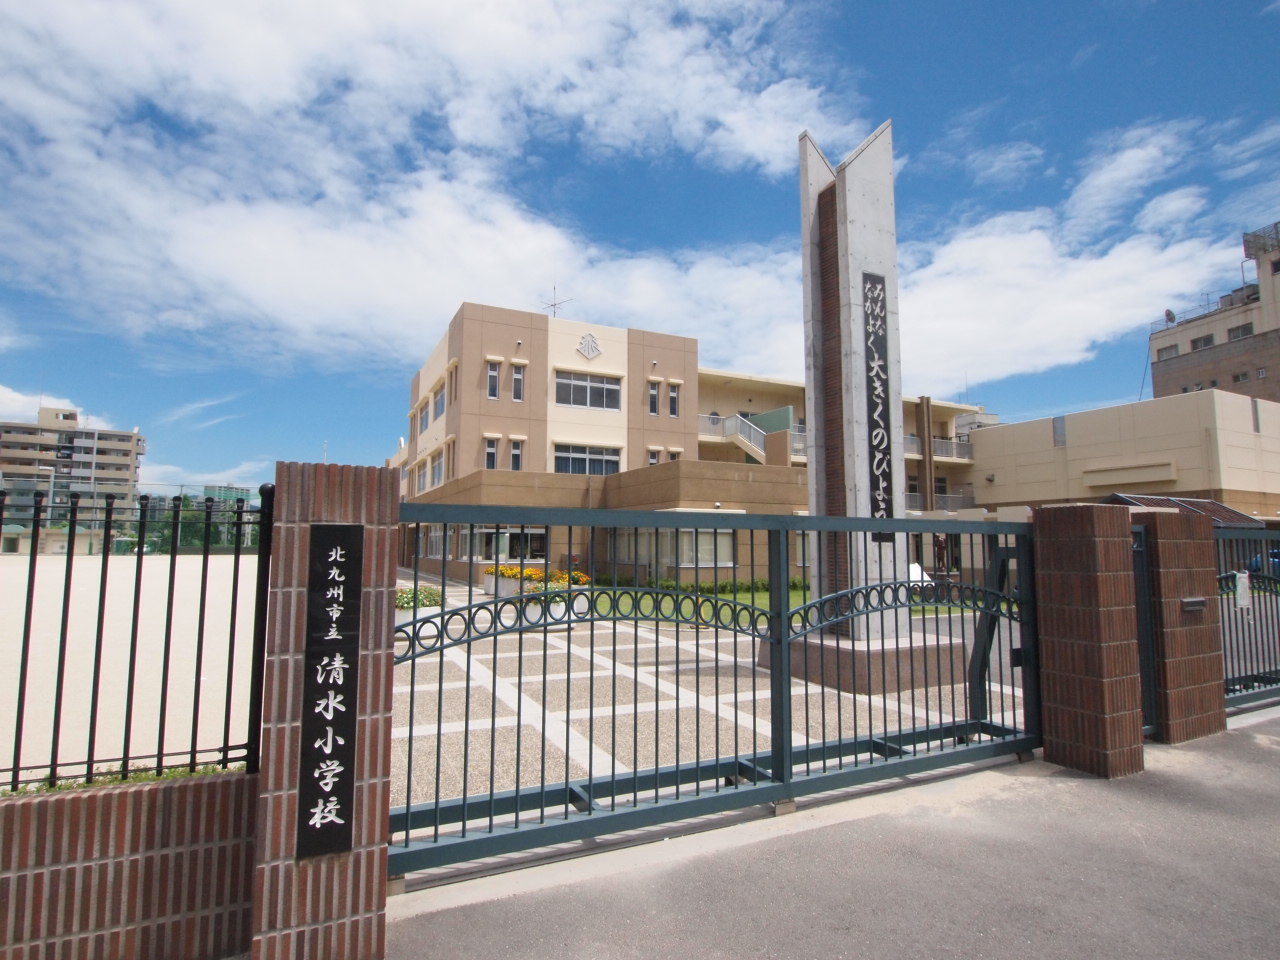 Primary school. 591m to Kitakyushu Shimizu elementary school (elementary school)